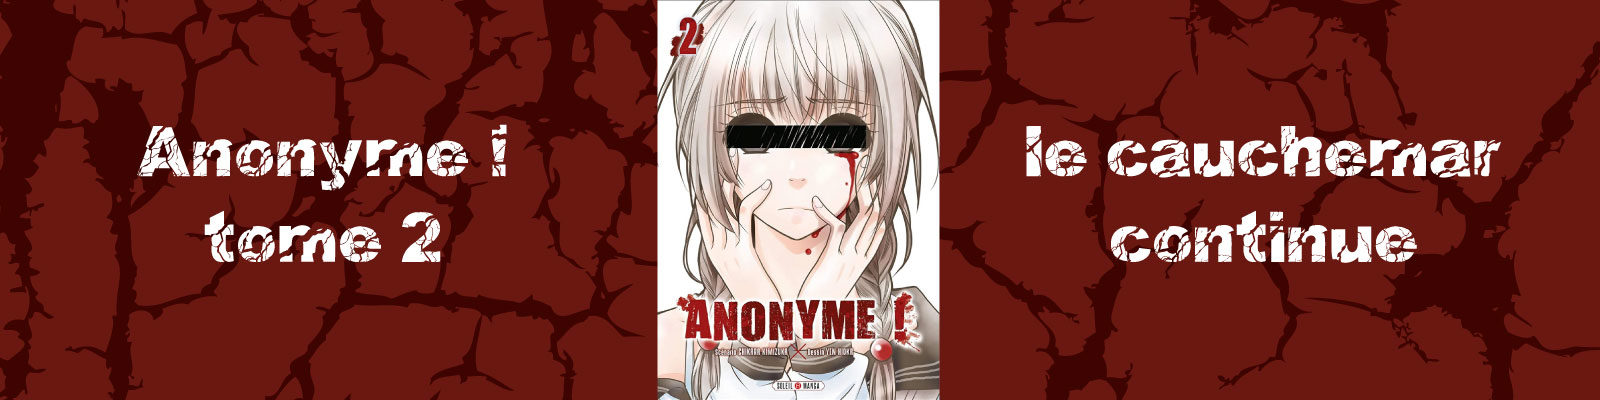 Anonyme-!-Vol.-2